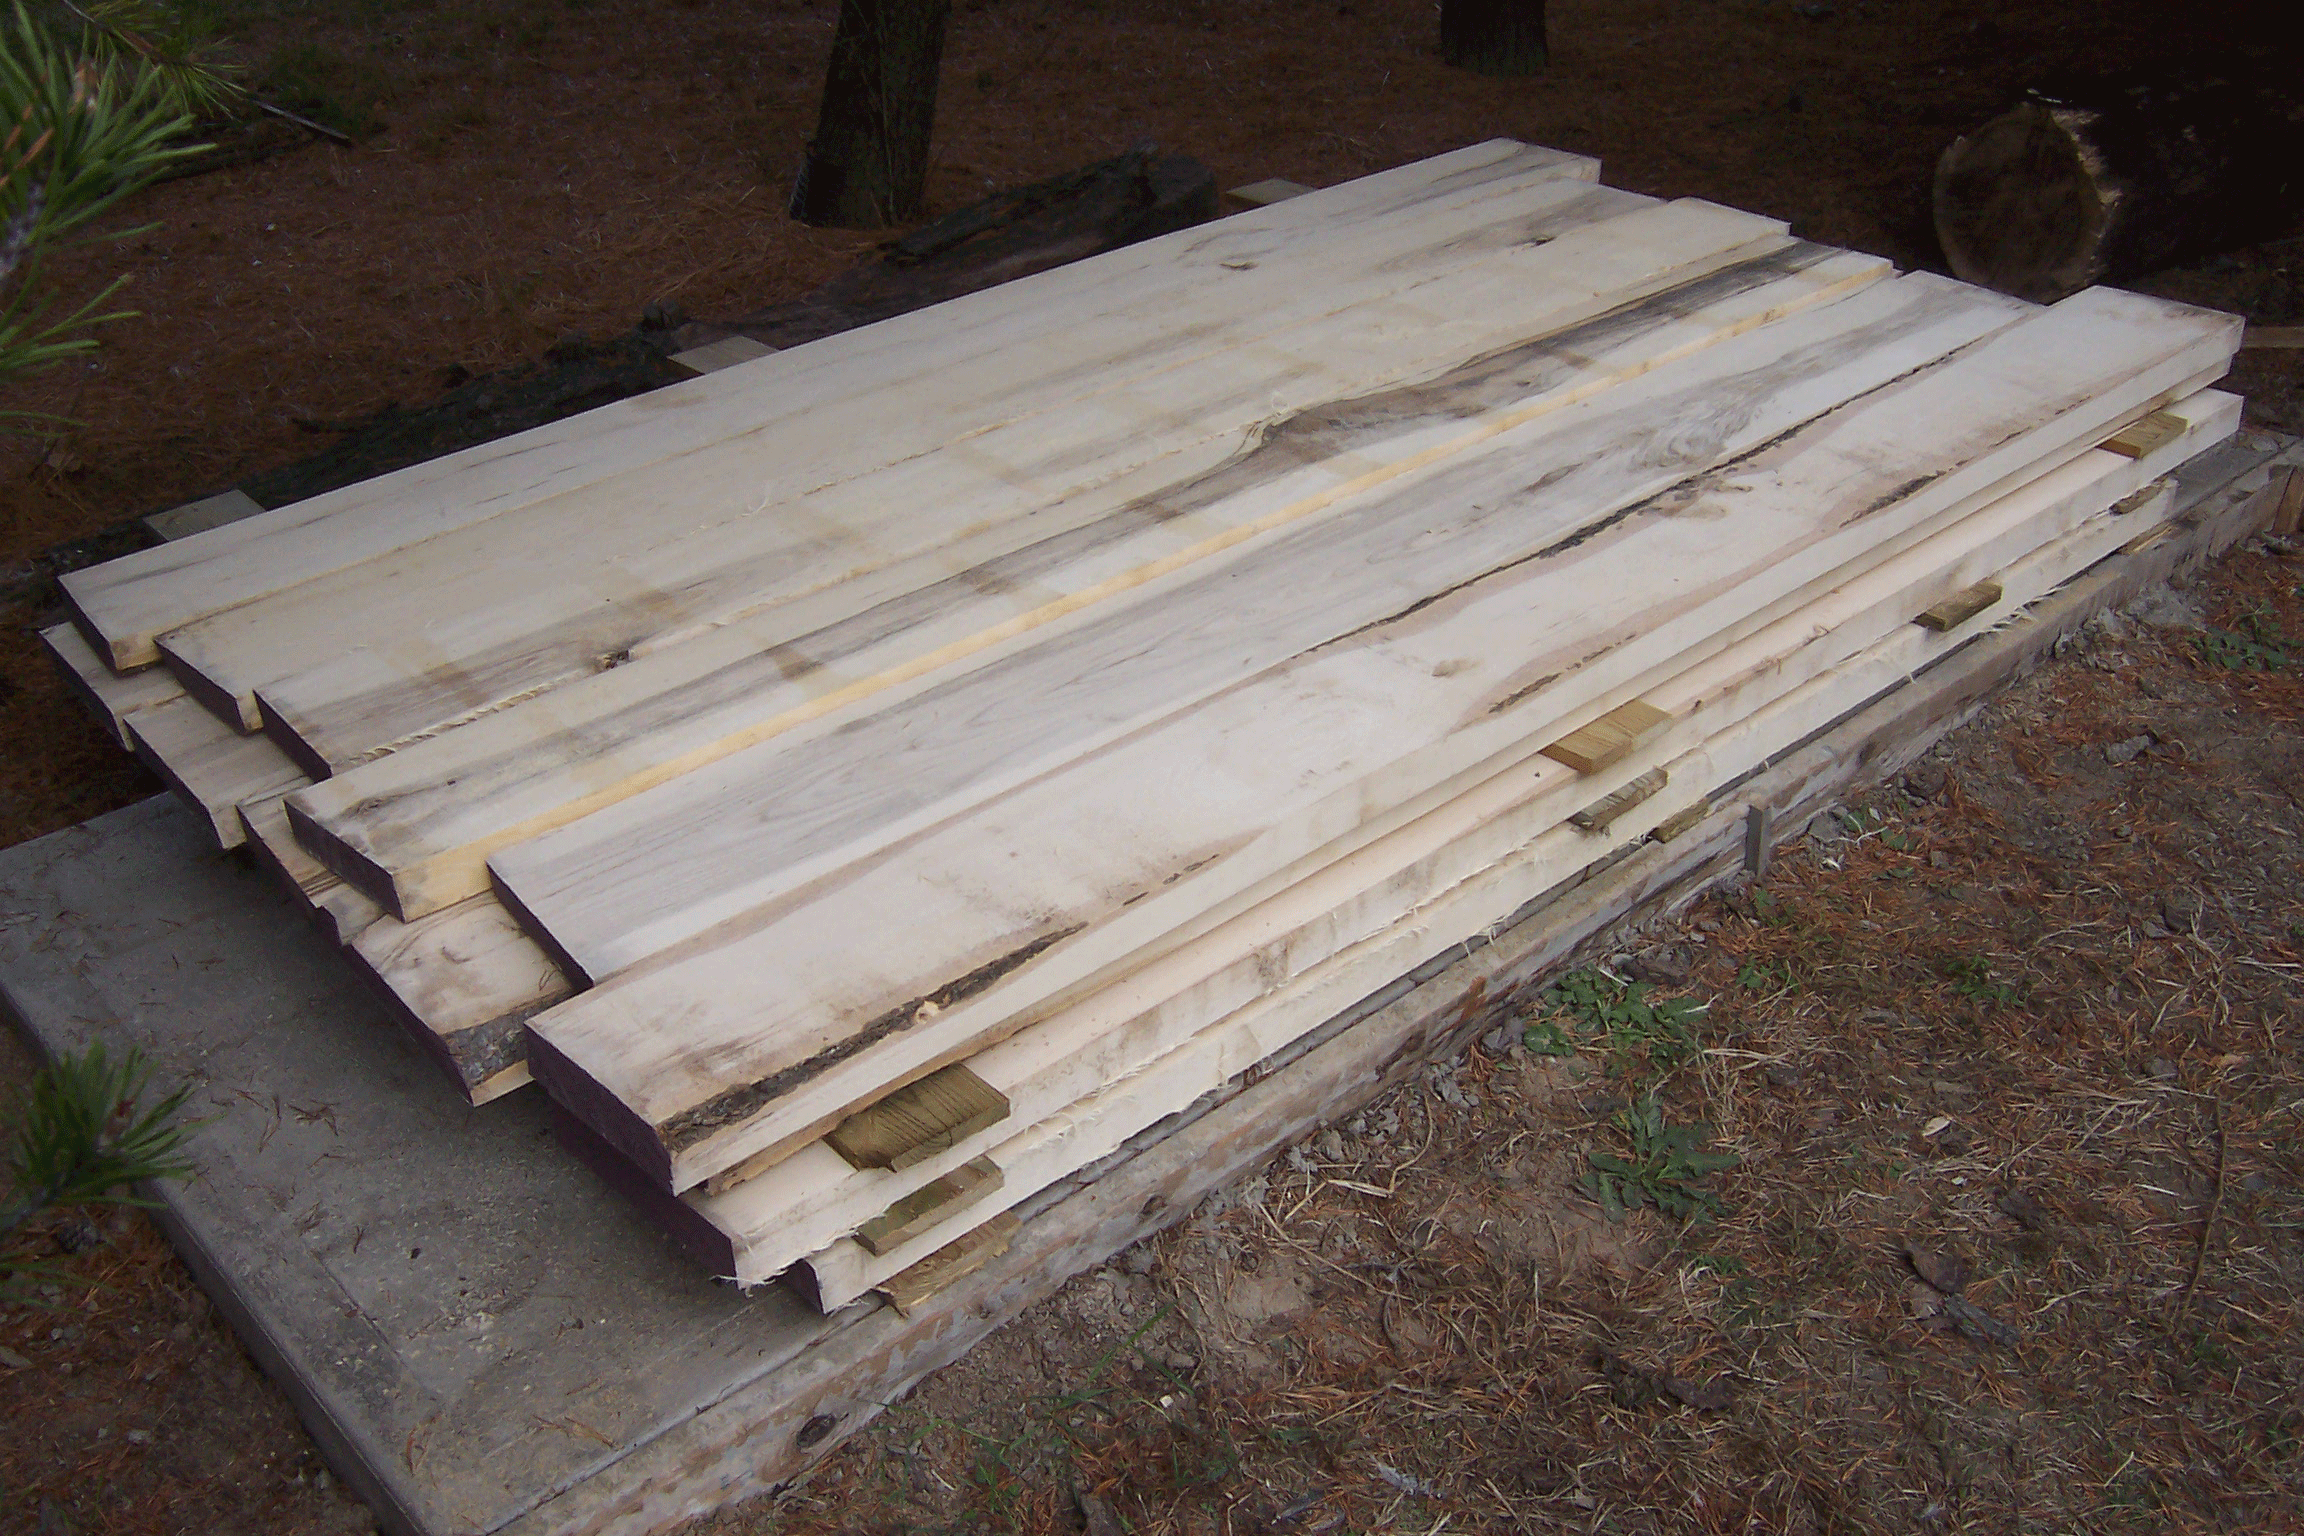 Air drying wood